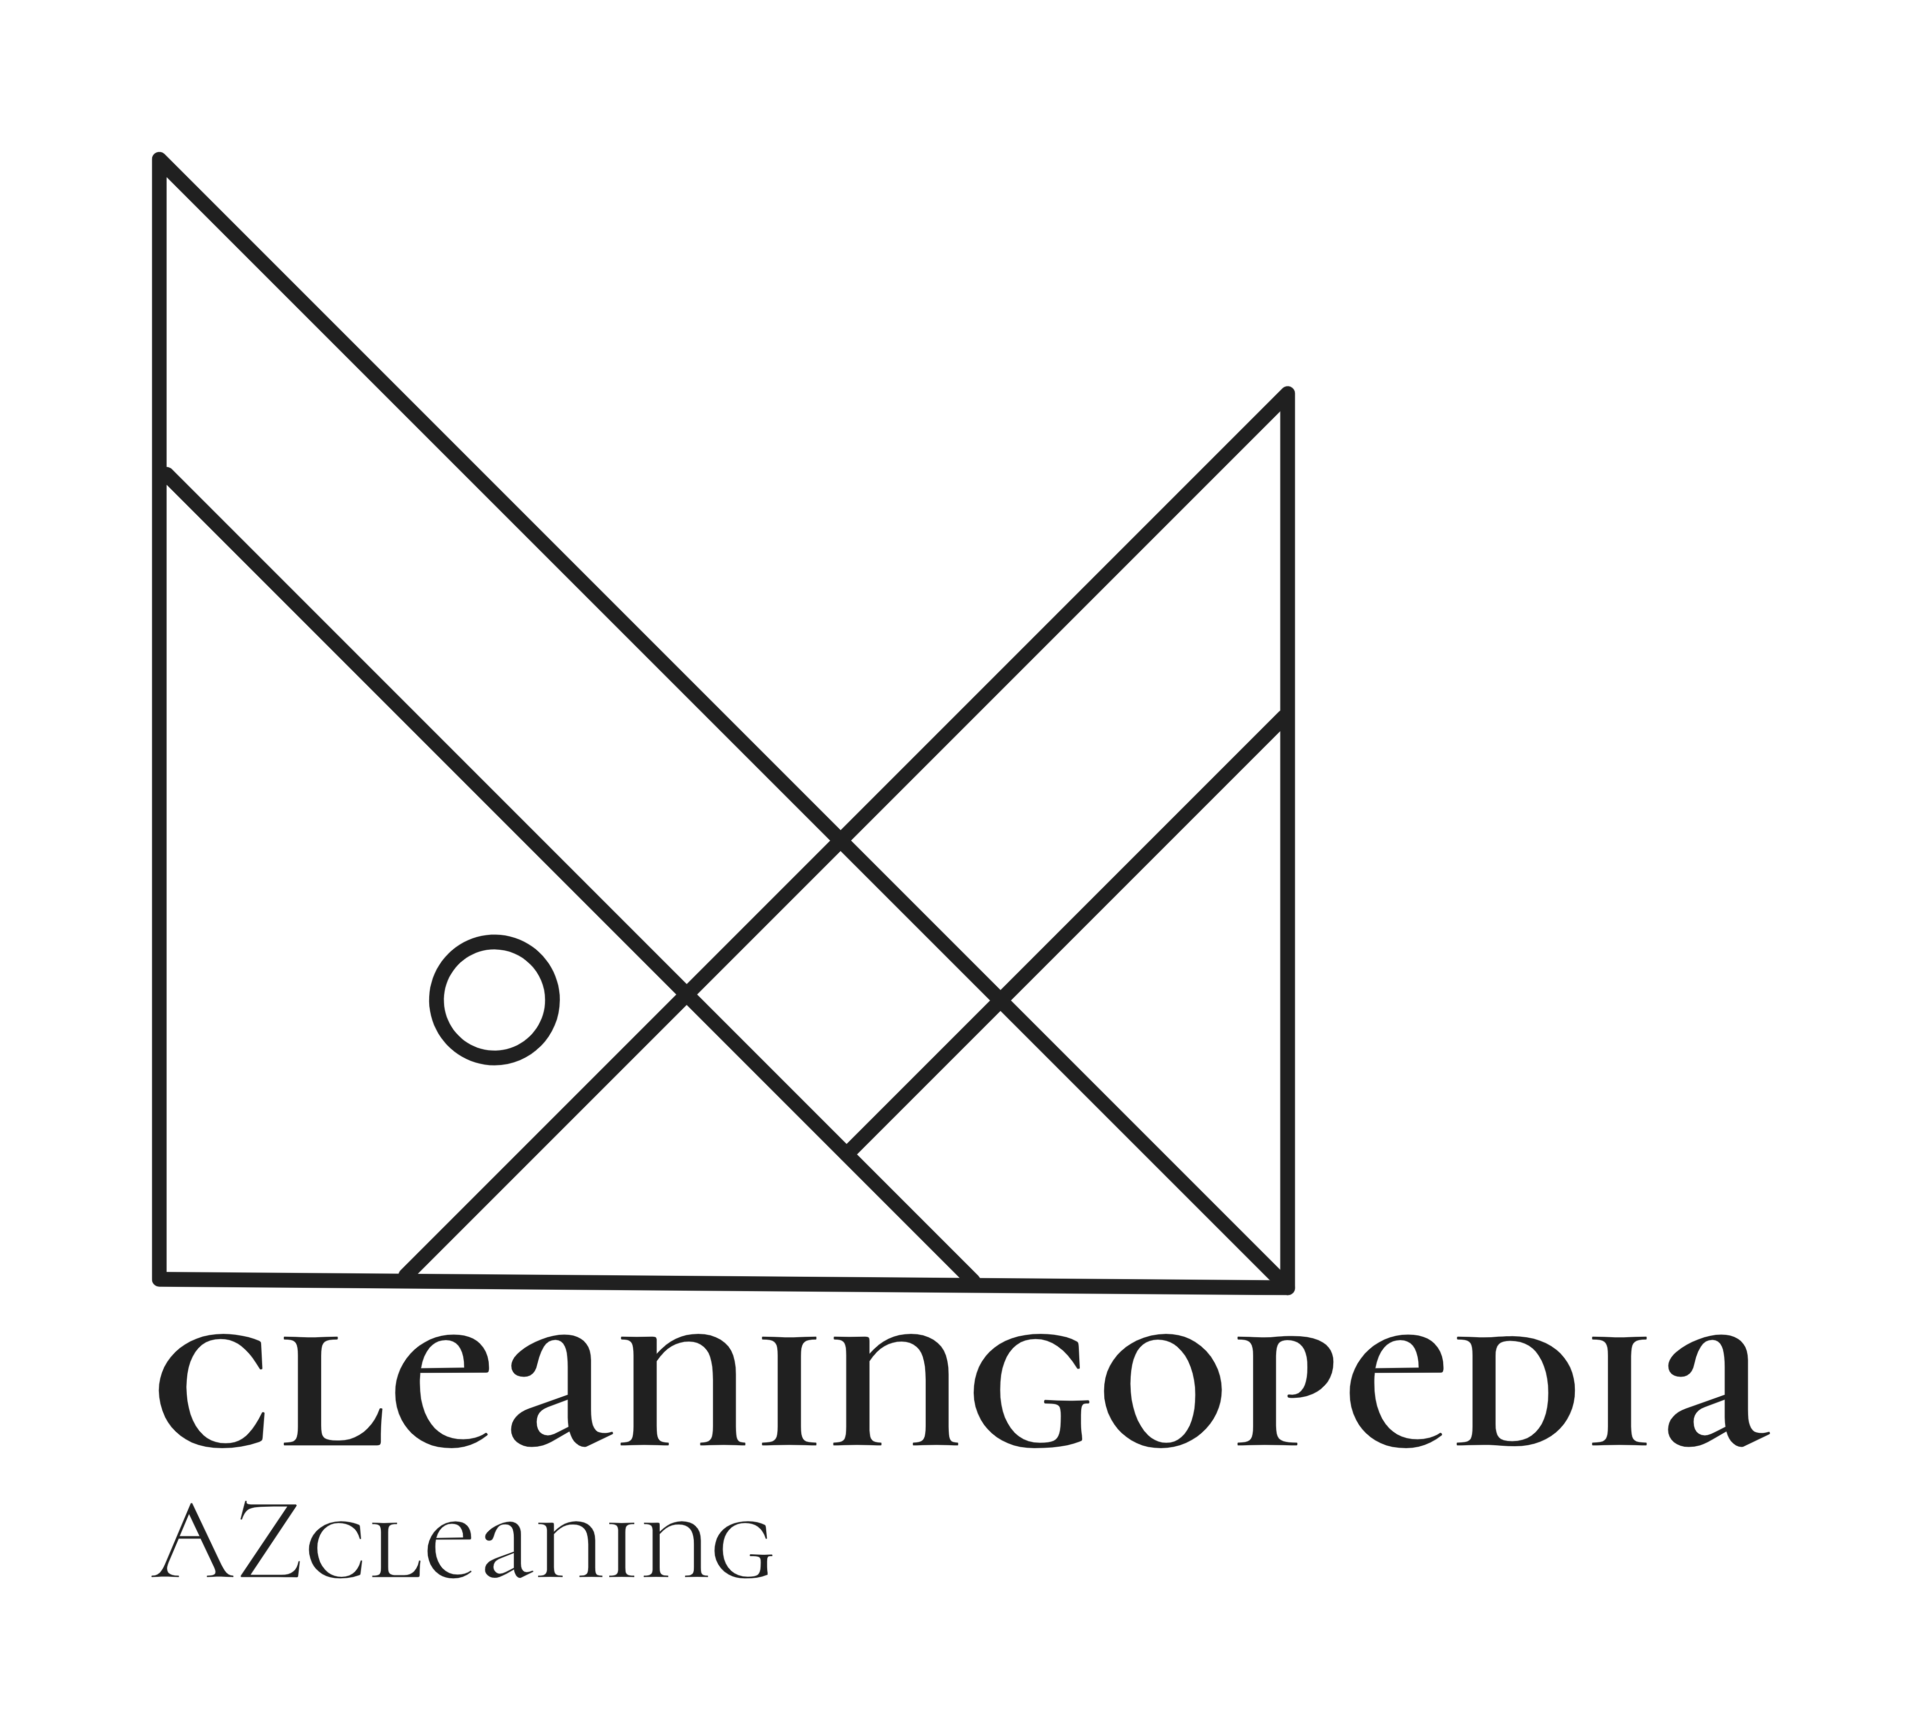 cleaningopedia